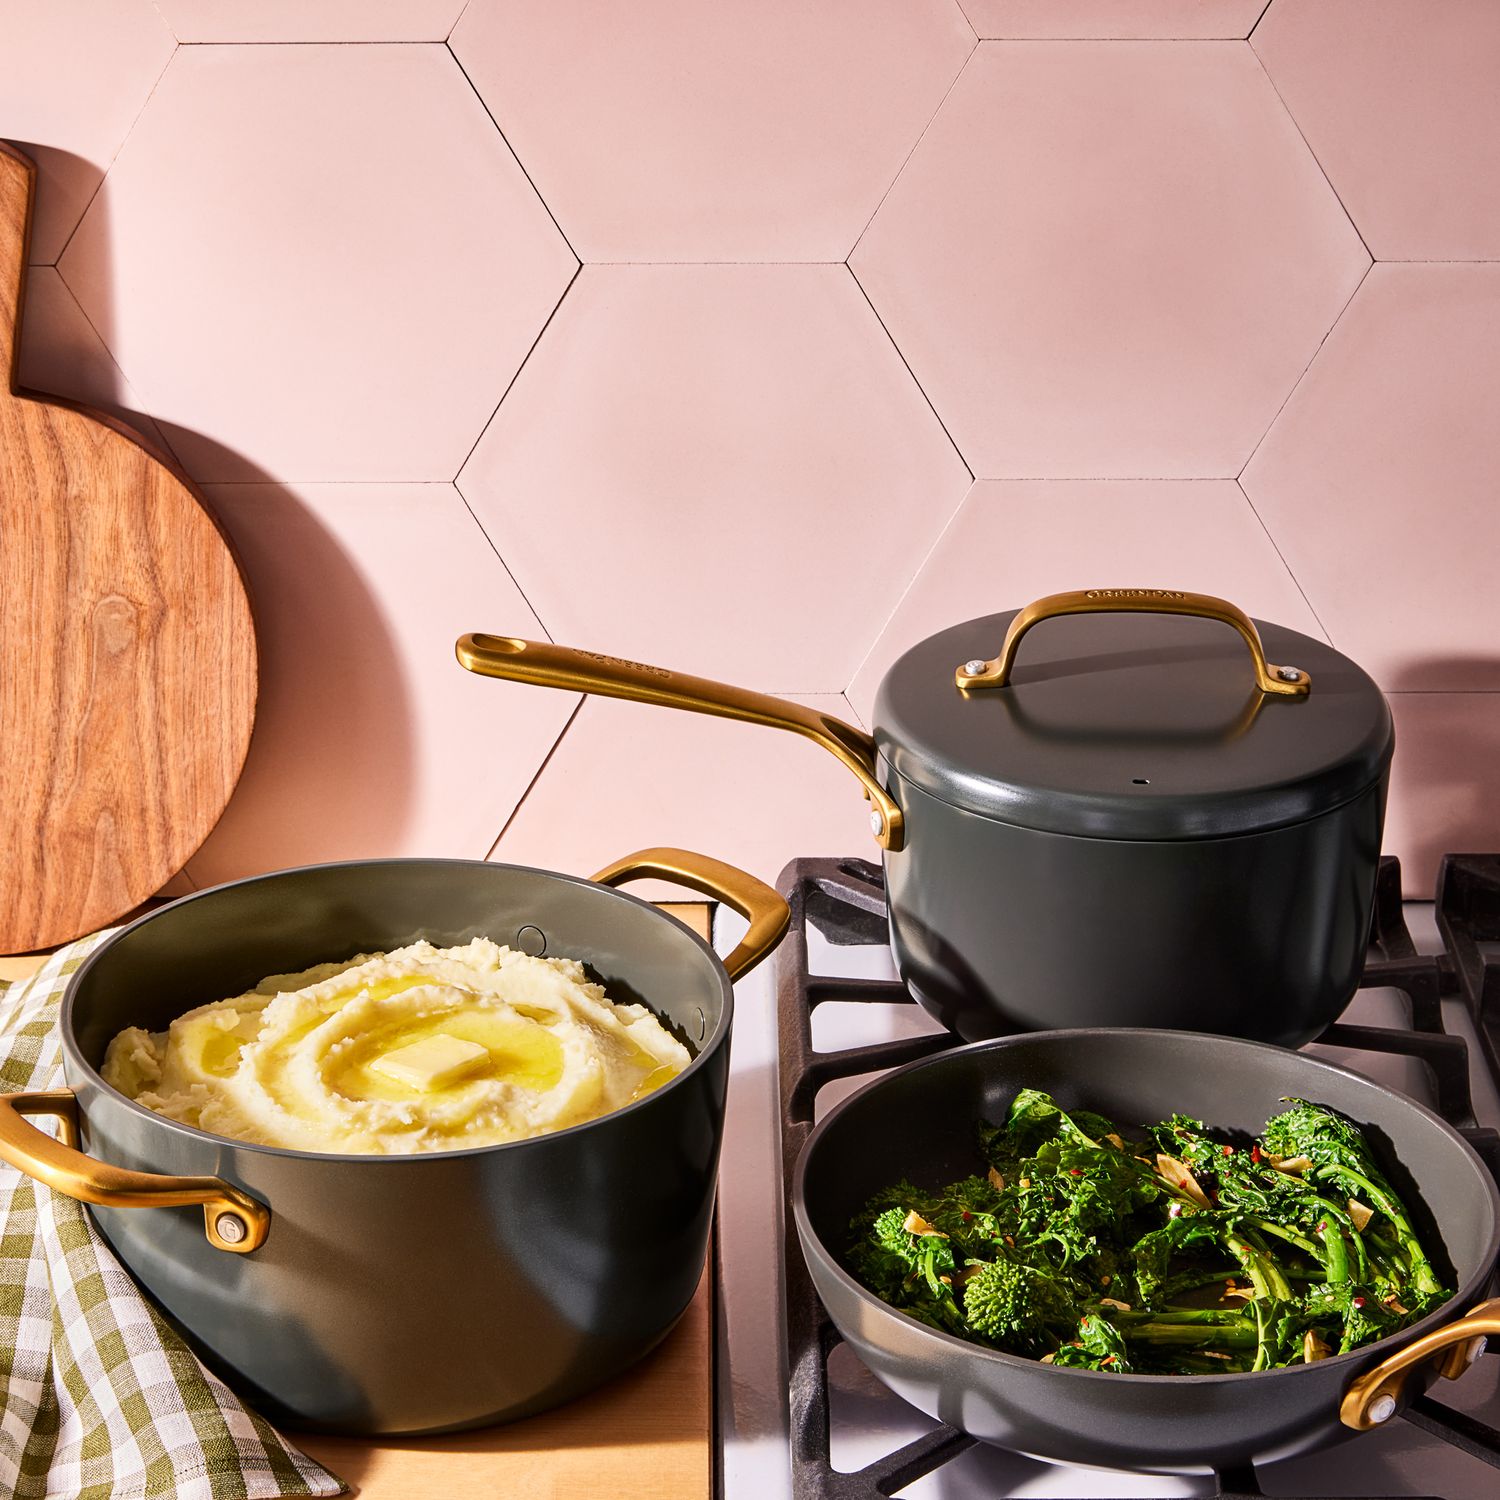 GreenPan GP5 Ceramic Nonstick 11-Piece Cookware Set on Food52